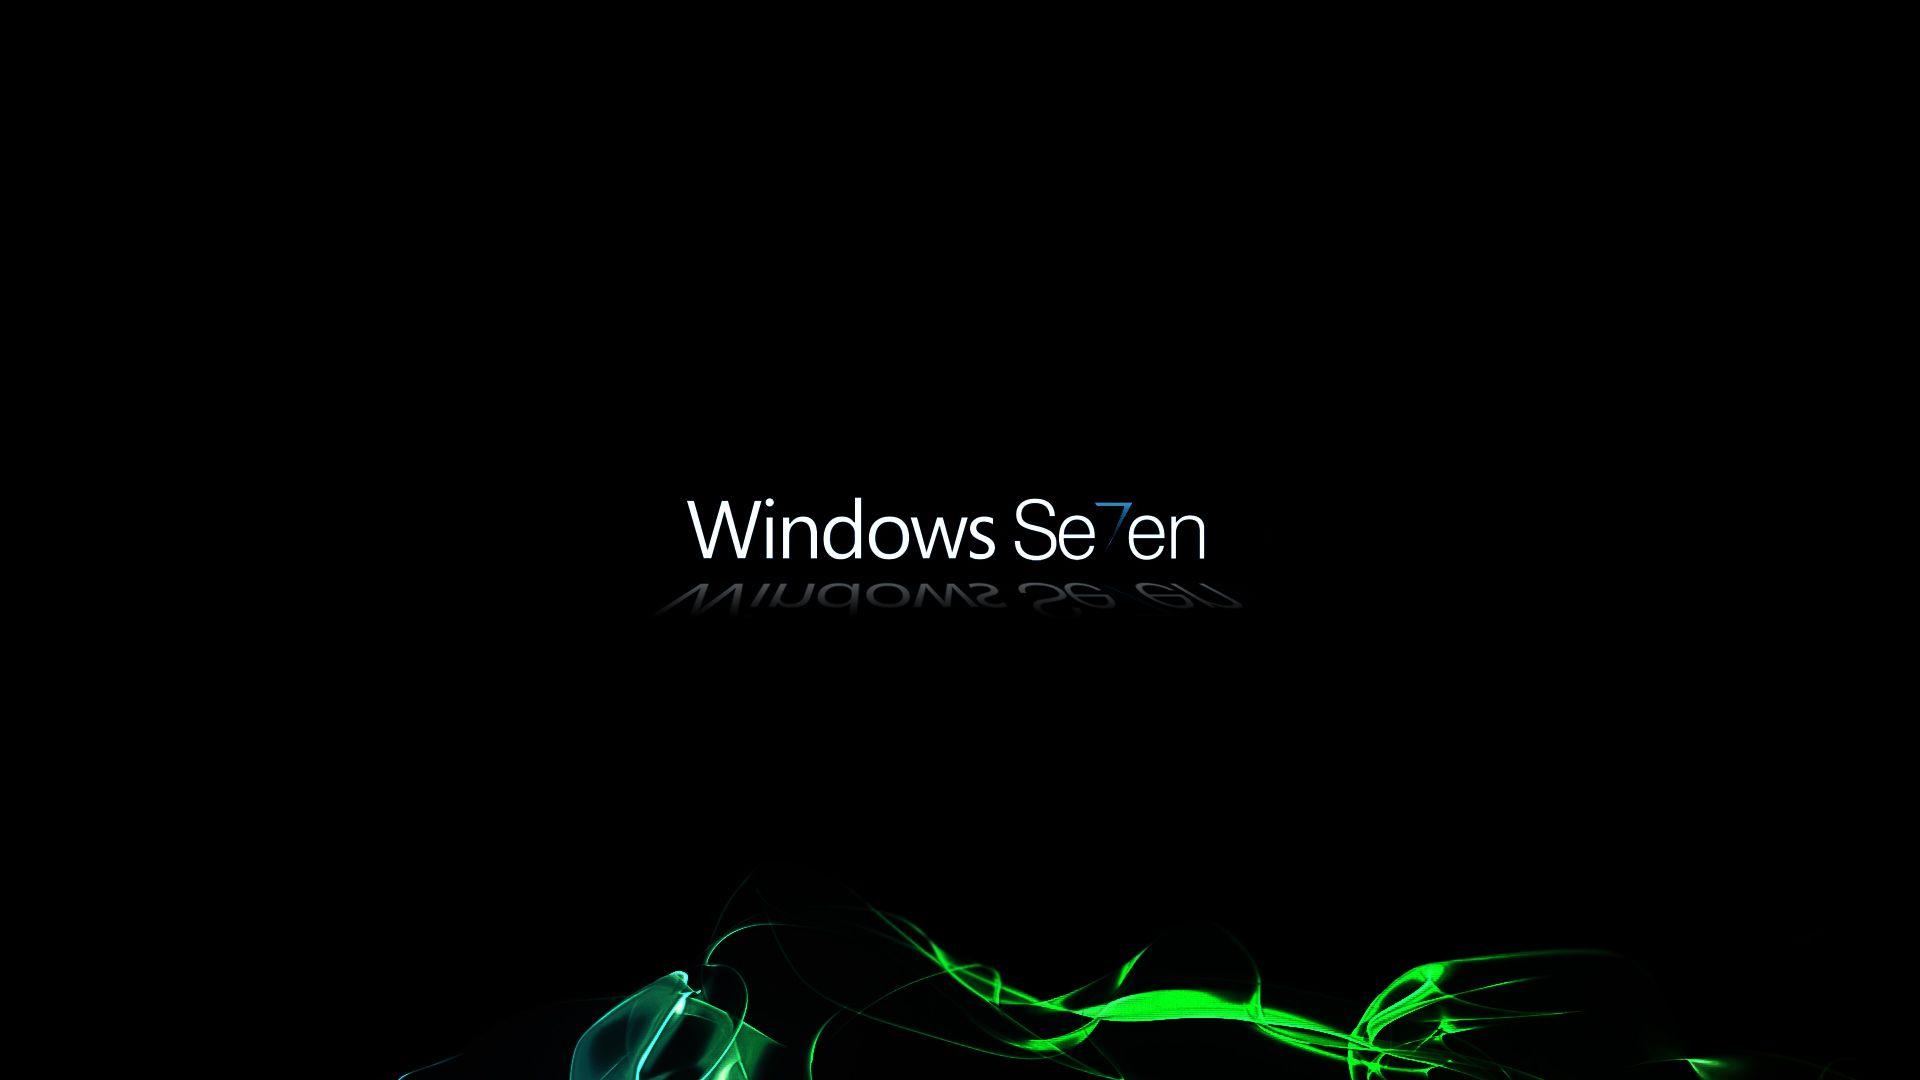 Windows Seven Black Screen HD Image Wallpaper